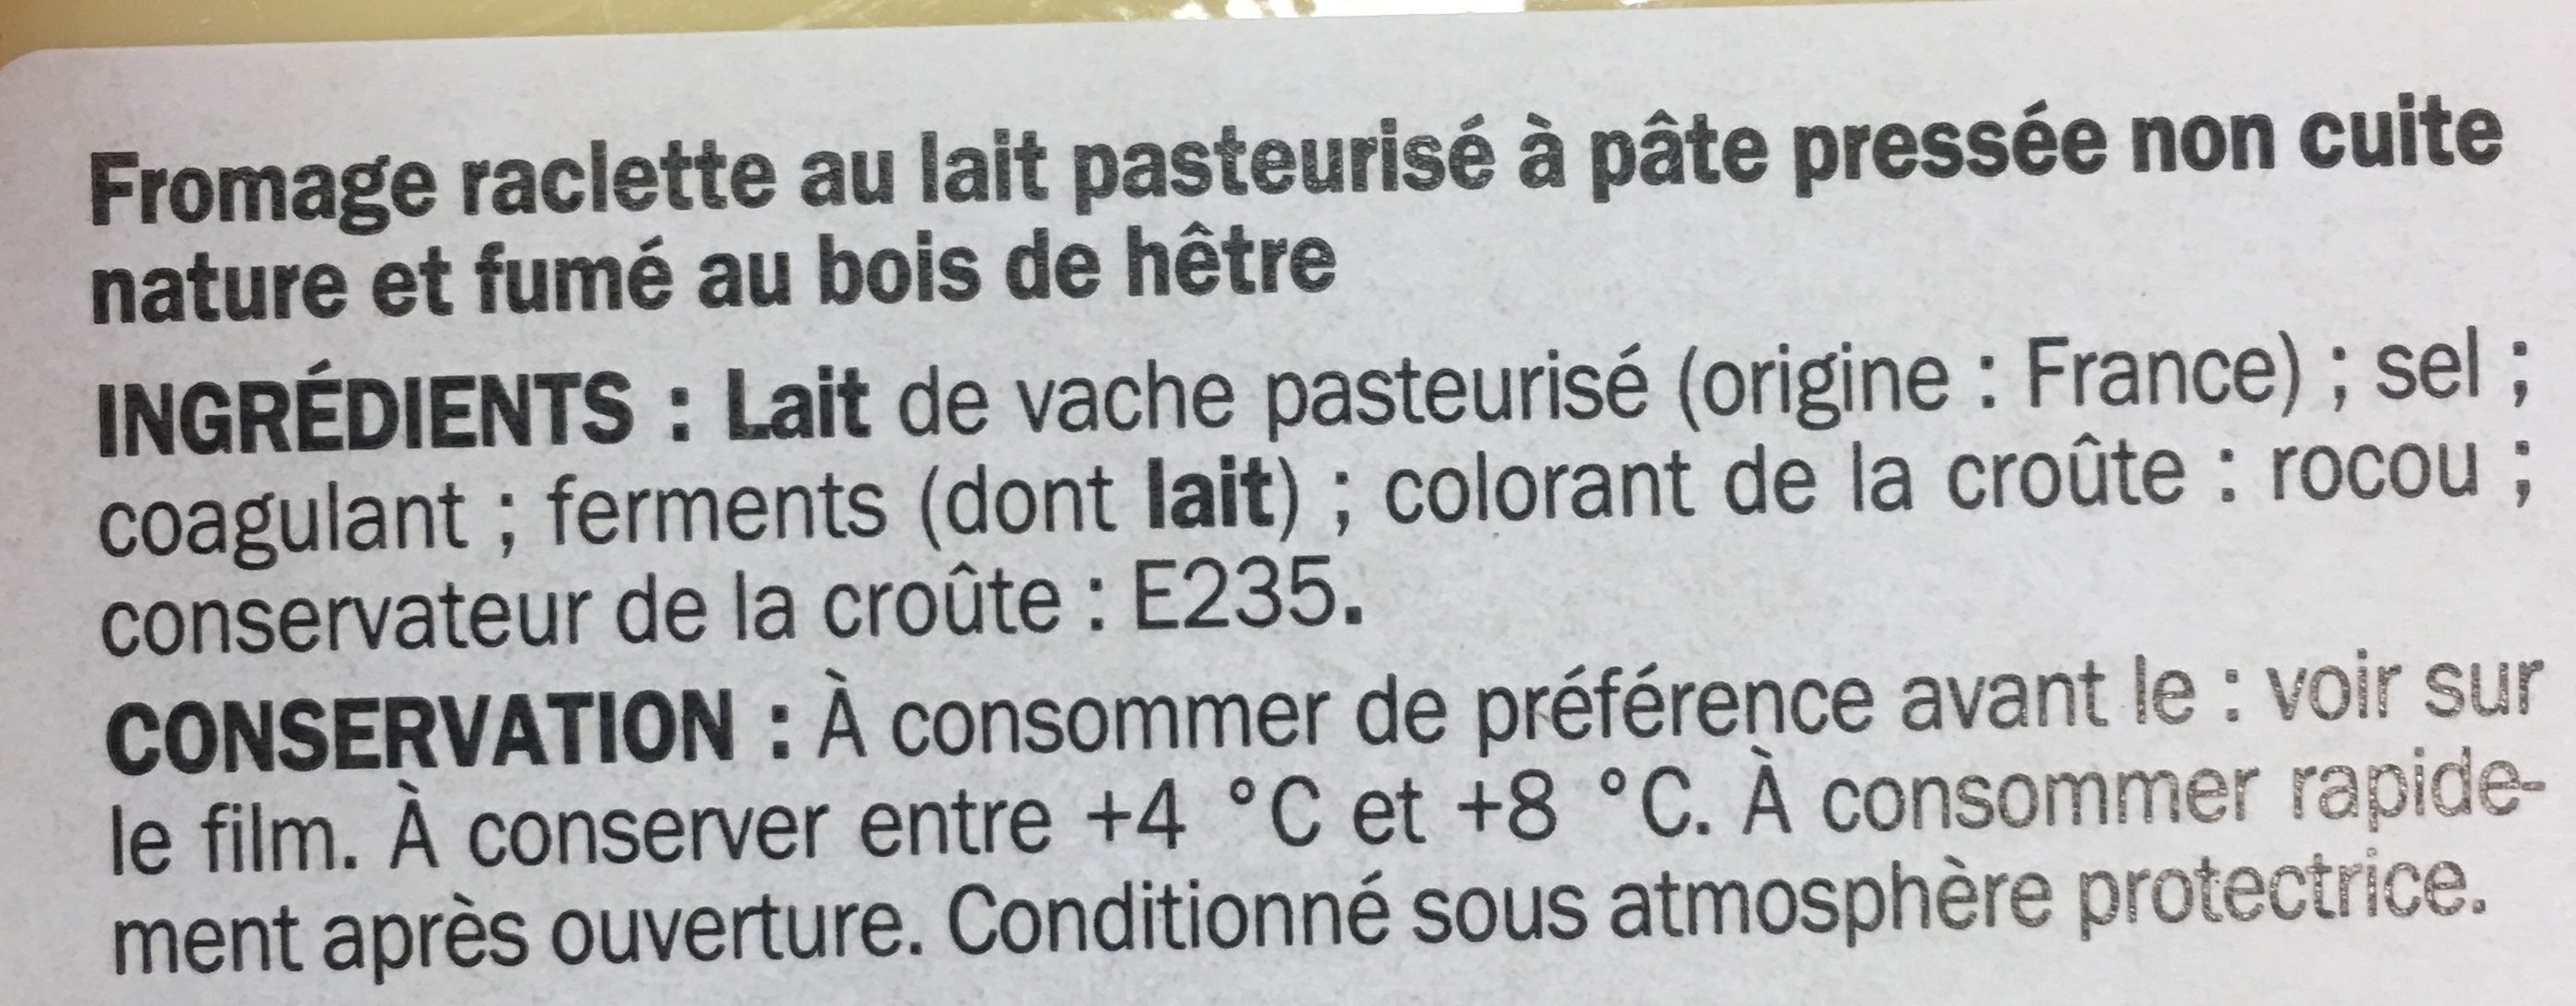 Fromage raclette Nature et fumé - 成分 - fr